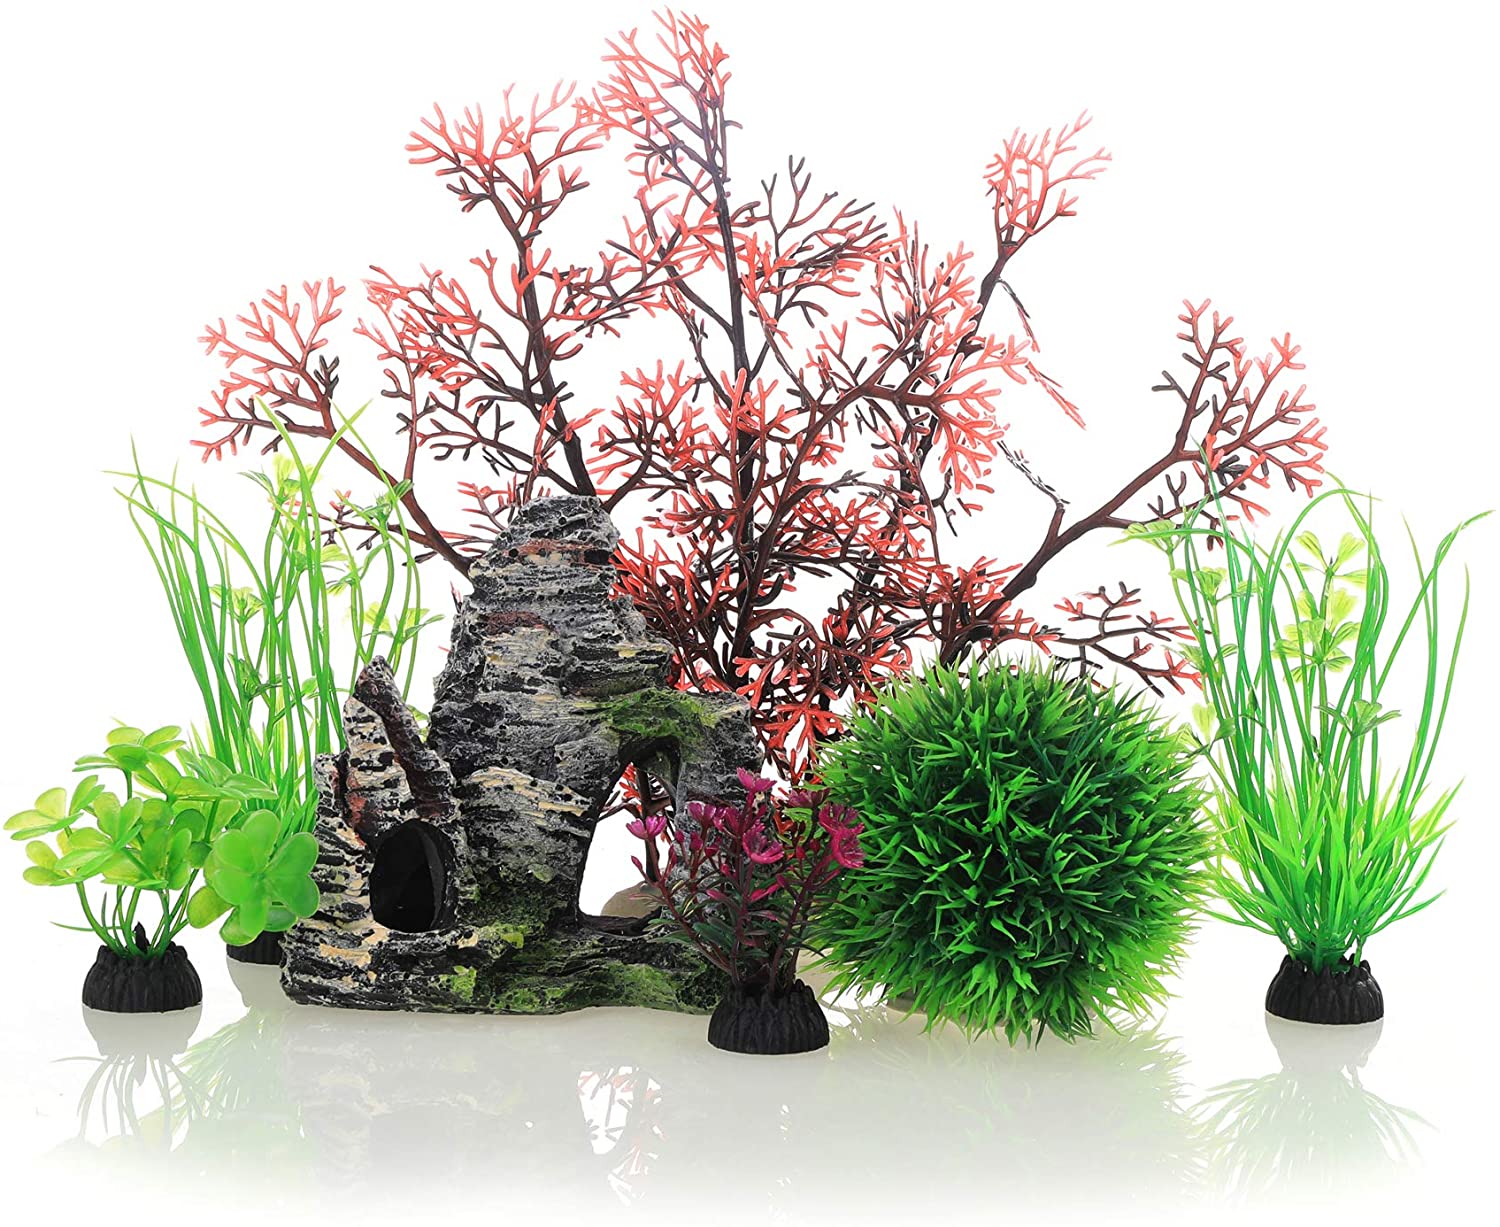 Review of JIH Aquarium Fish Tank Plastic Plants and Cave Rock Decorations (CU89Red-7)